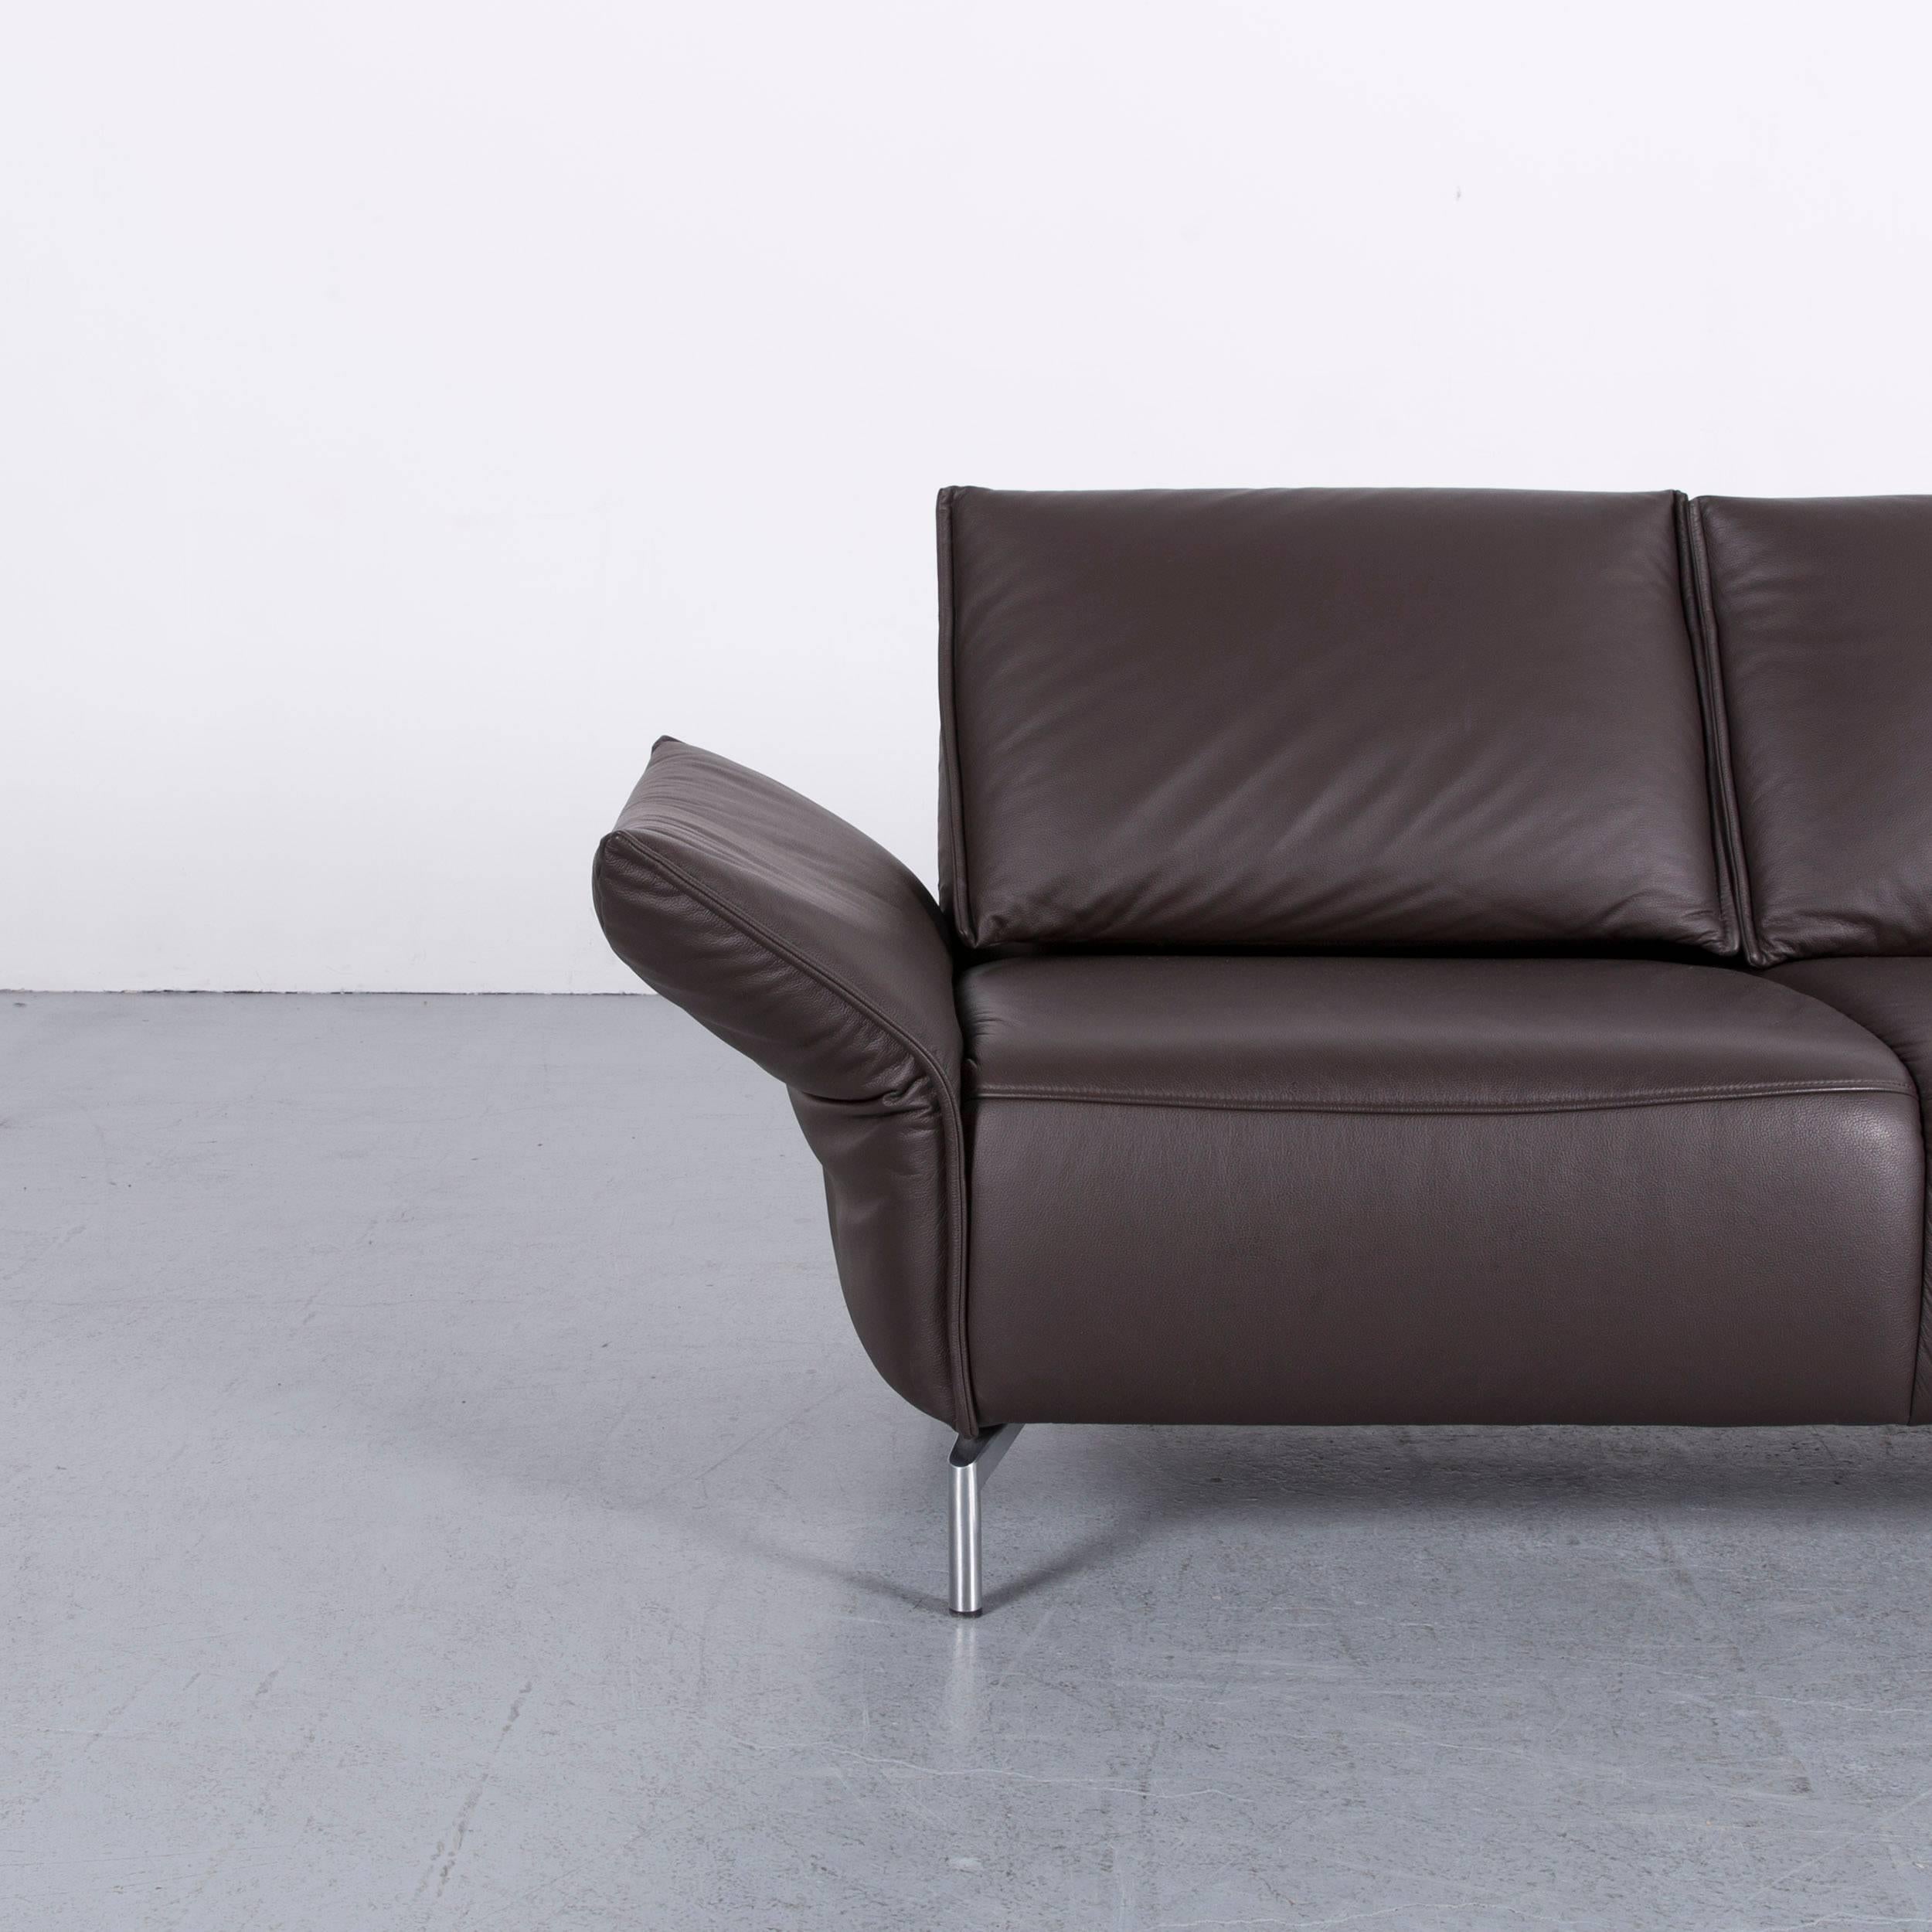 German Koinor Vanda Two-Seat Sofa Brown Leather Function